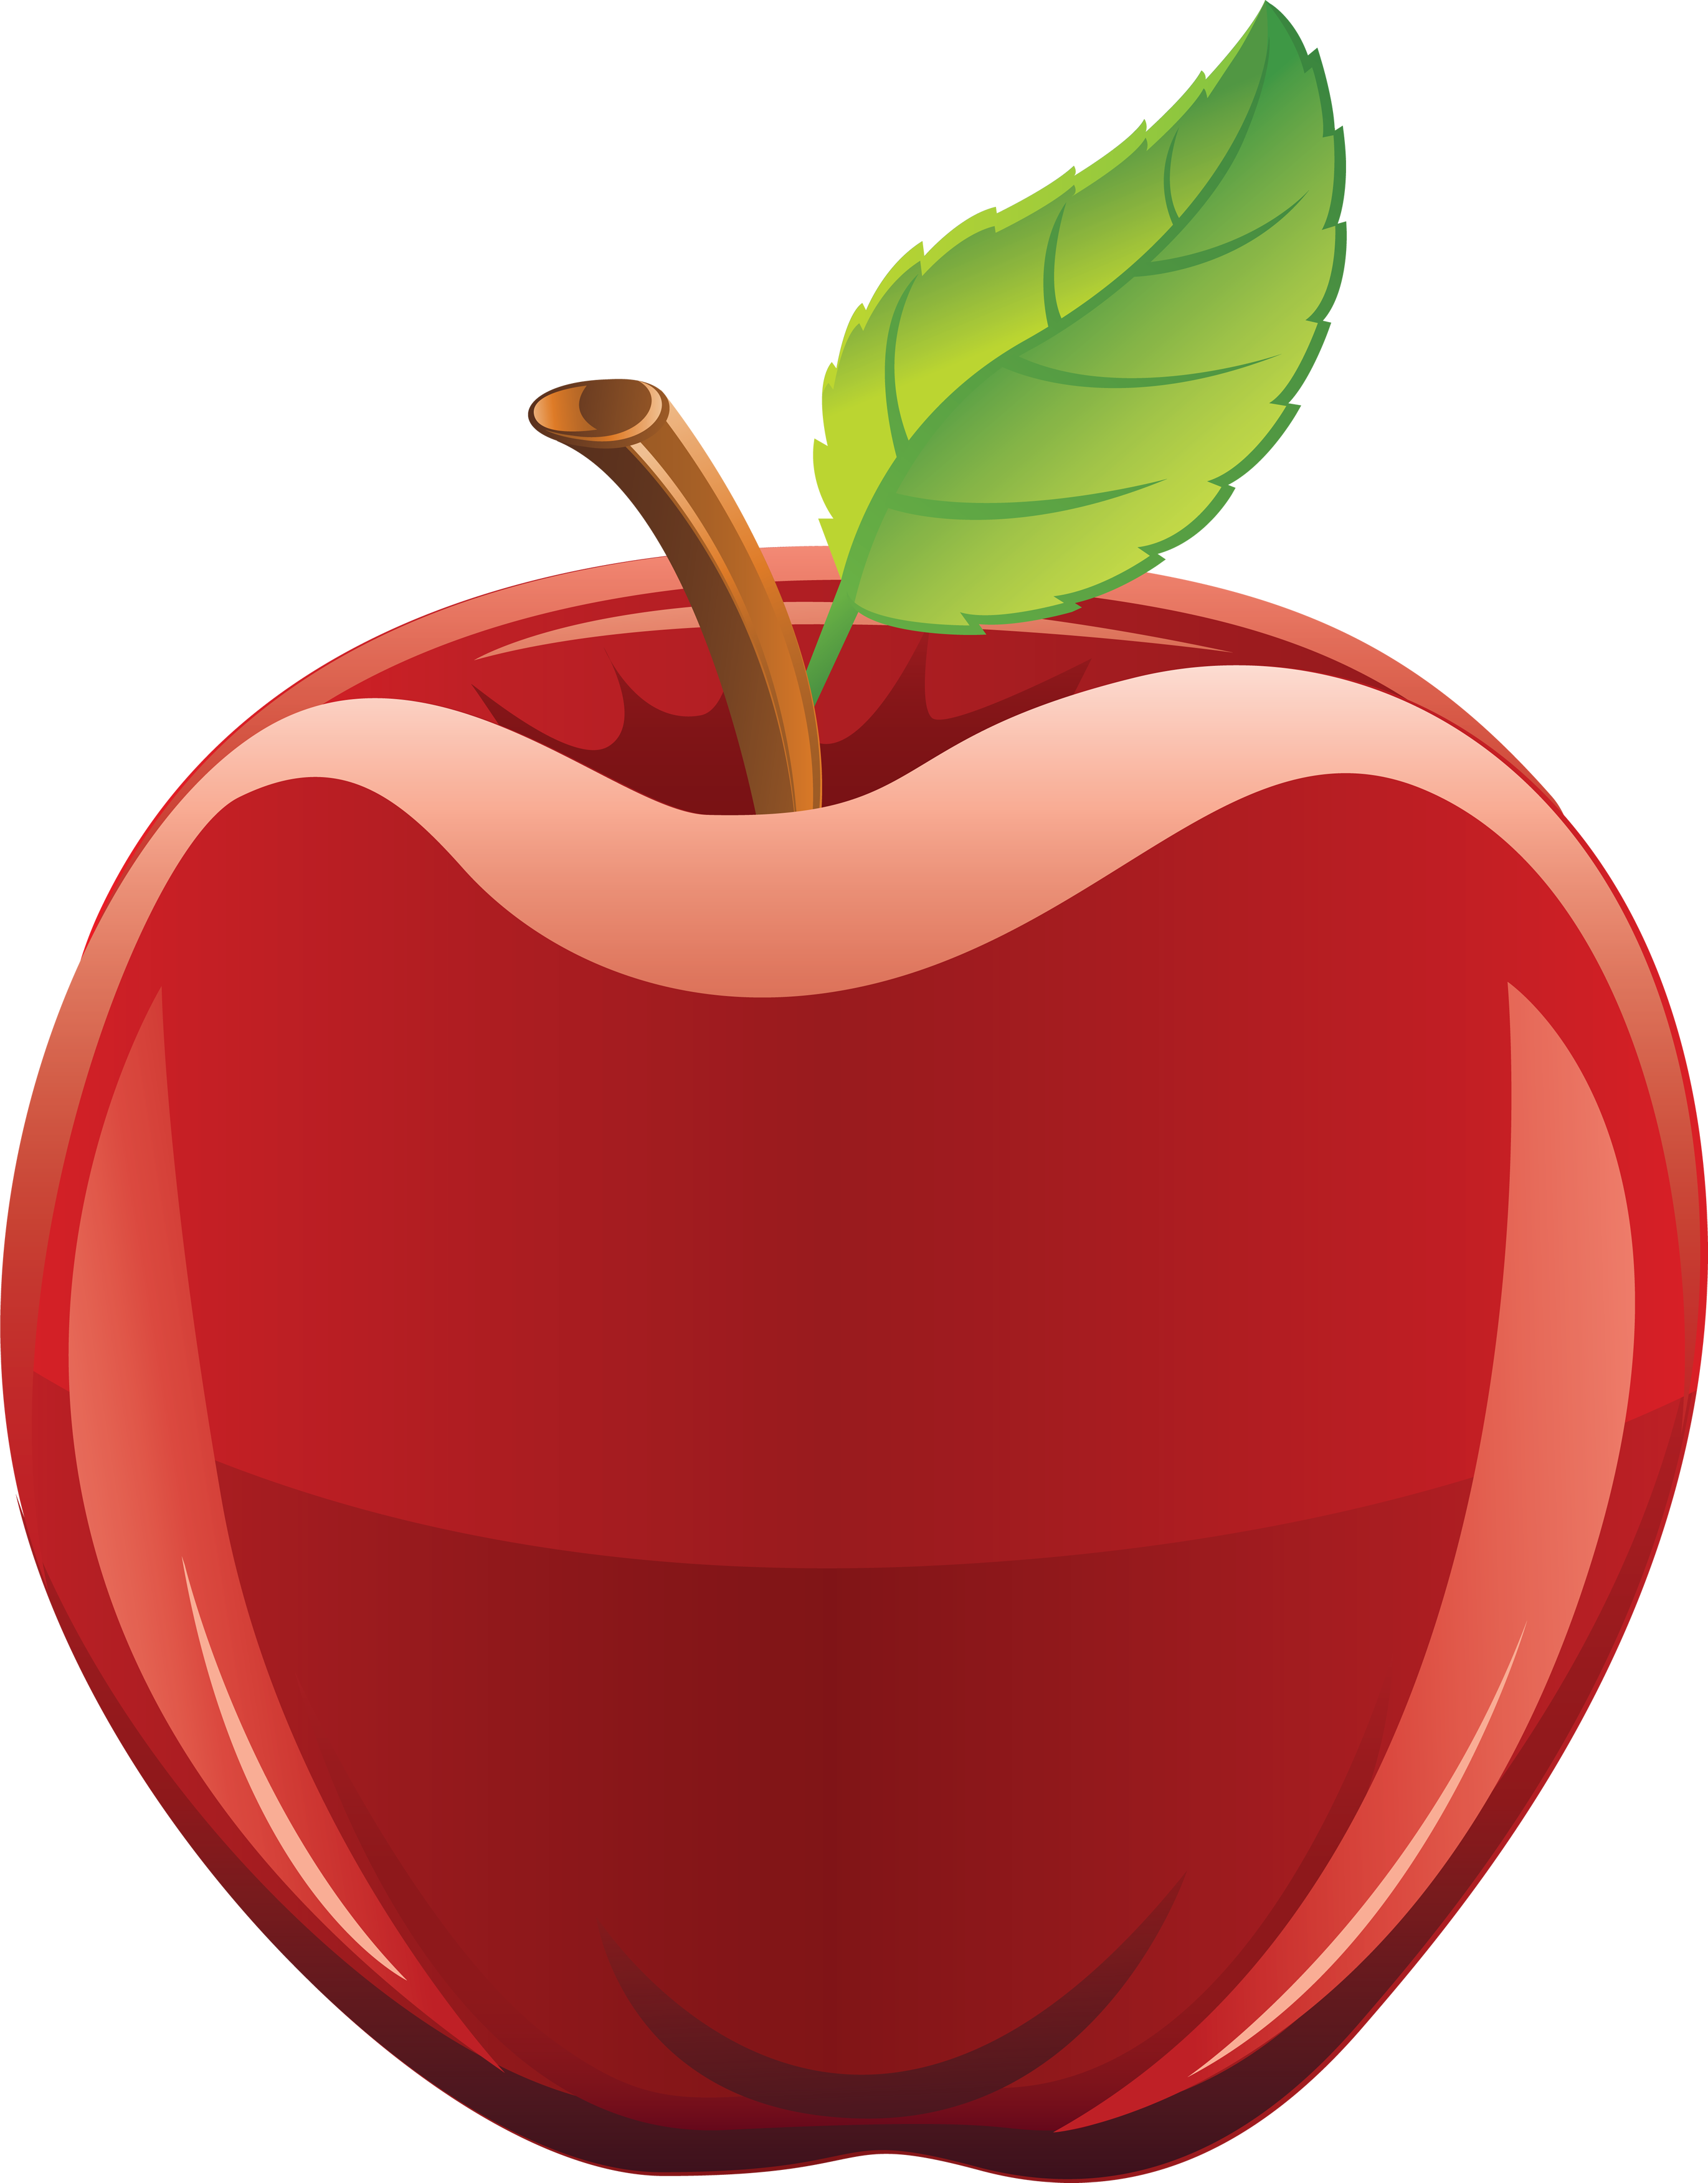 Apple PNG For Teachers - 160202